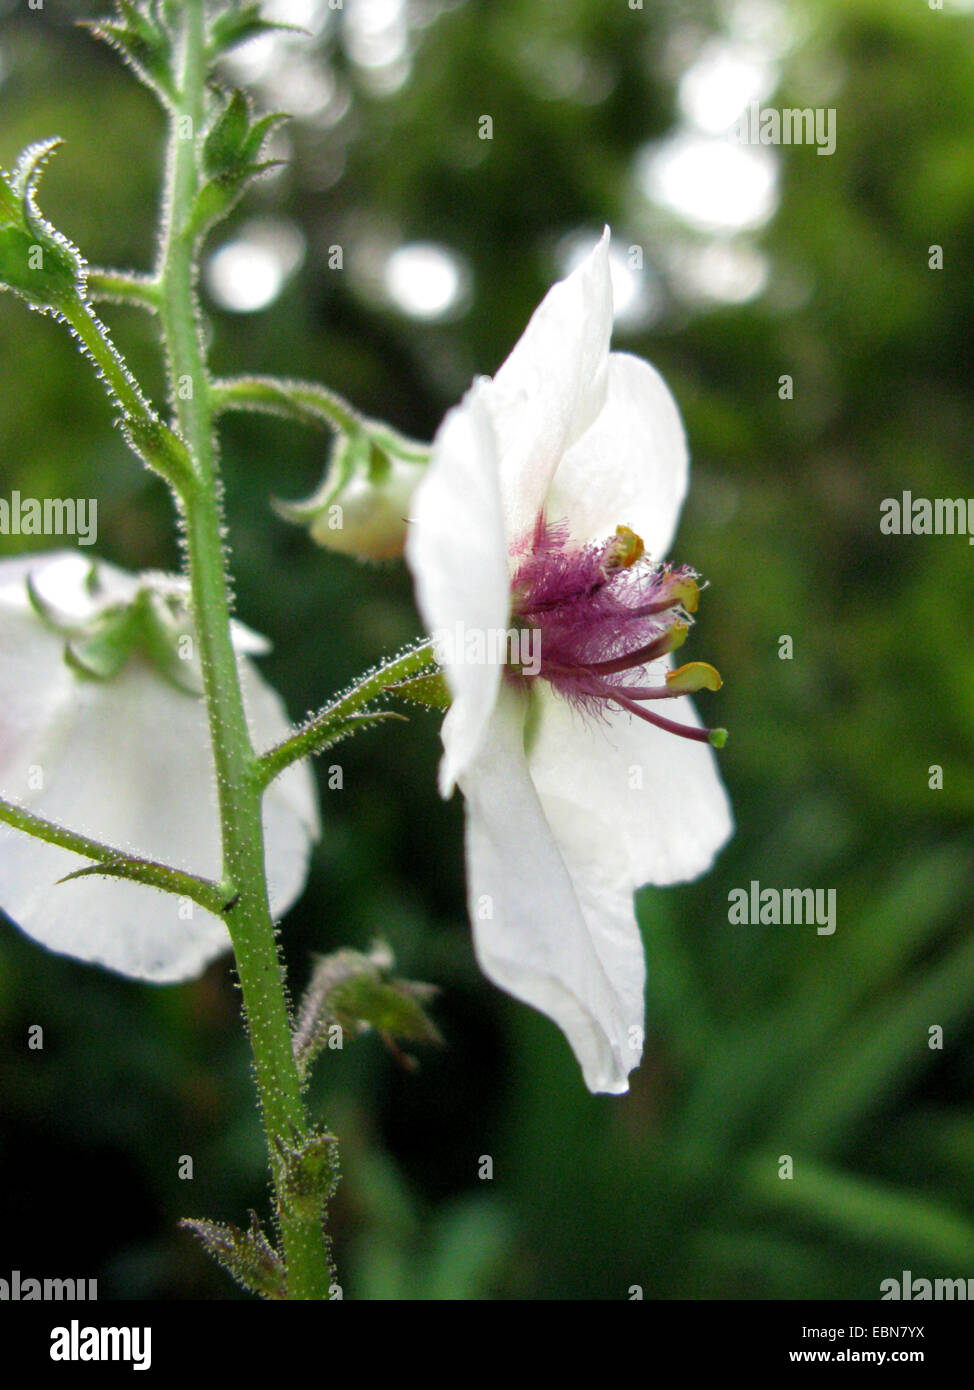 purple mullein, ornamental mullein (Verbascum phoeniceum 'Album', Verbascum phoeniceum Album), white flowering cultivar Stock Photo